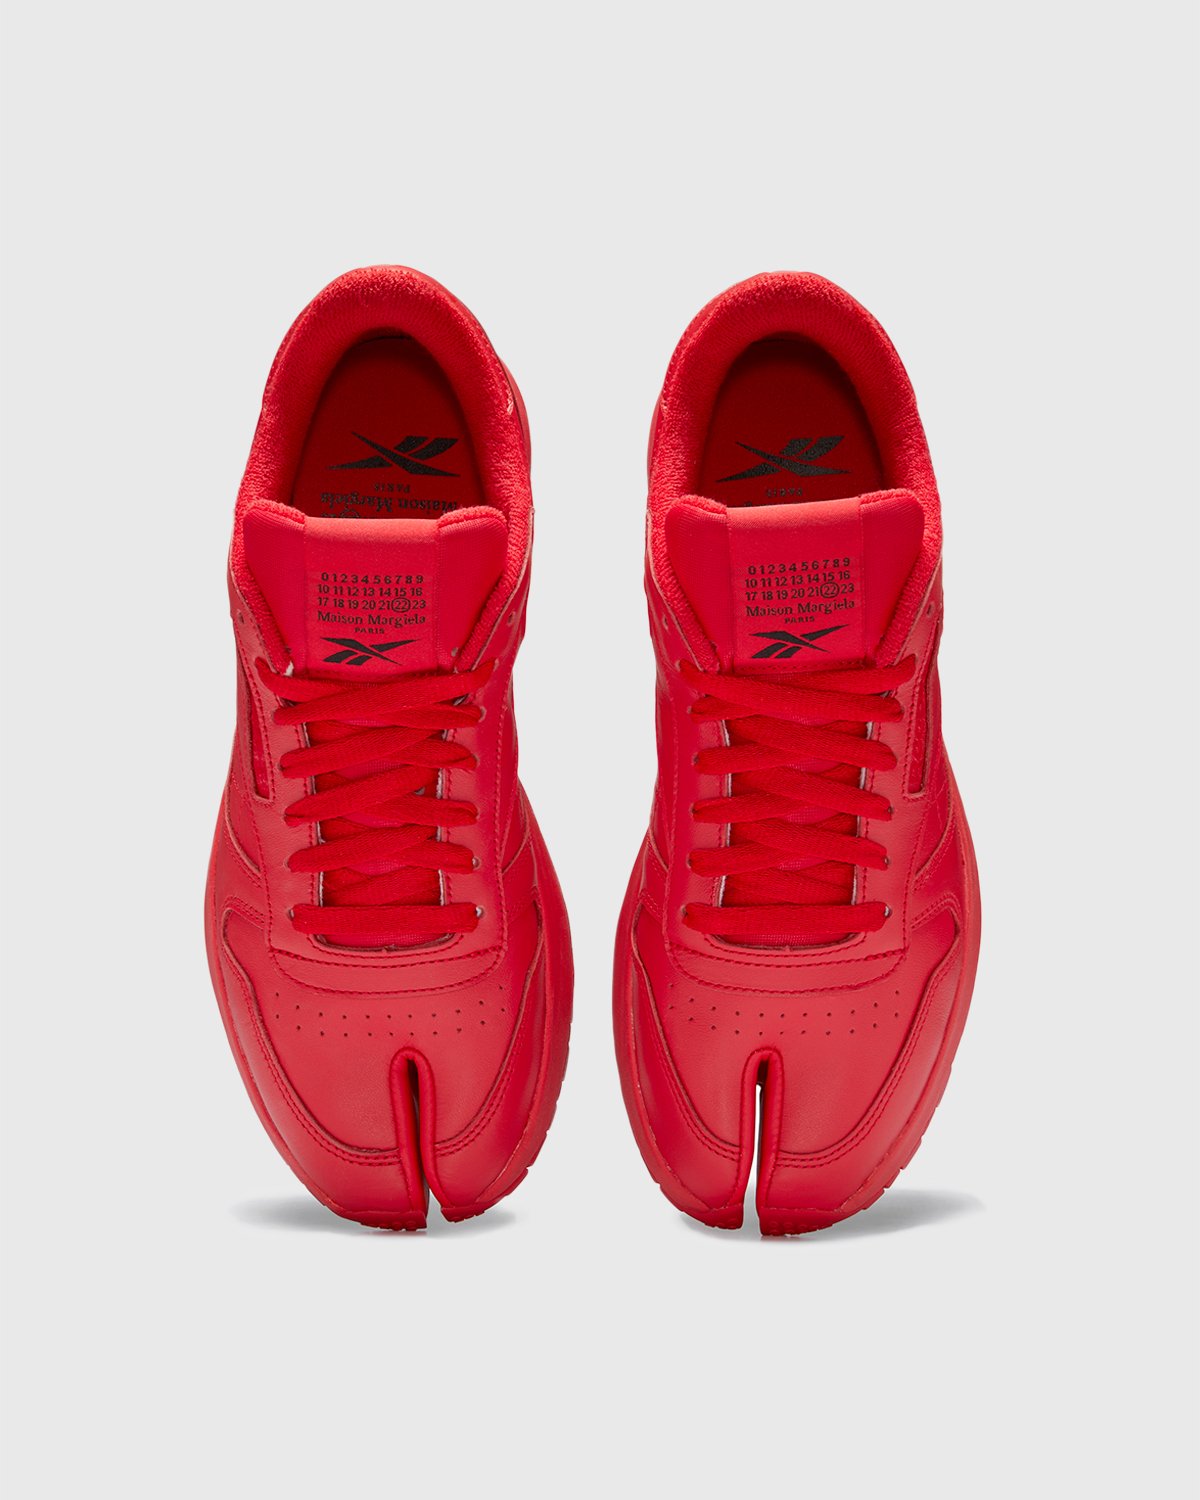 Maison Margiela x Reebok - Classic Leather Tabi Red - Footwear - Red - Image 4